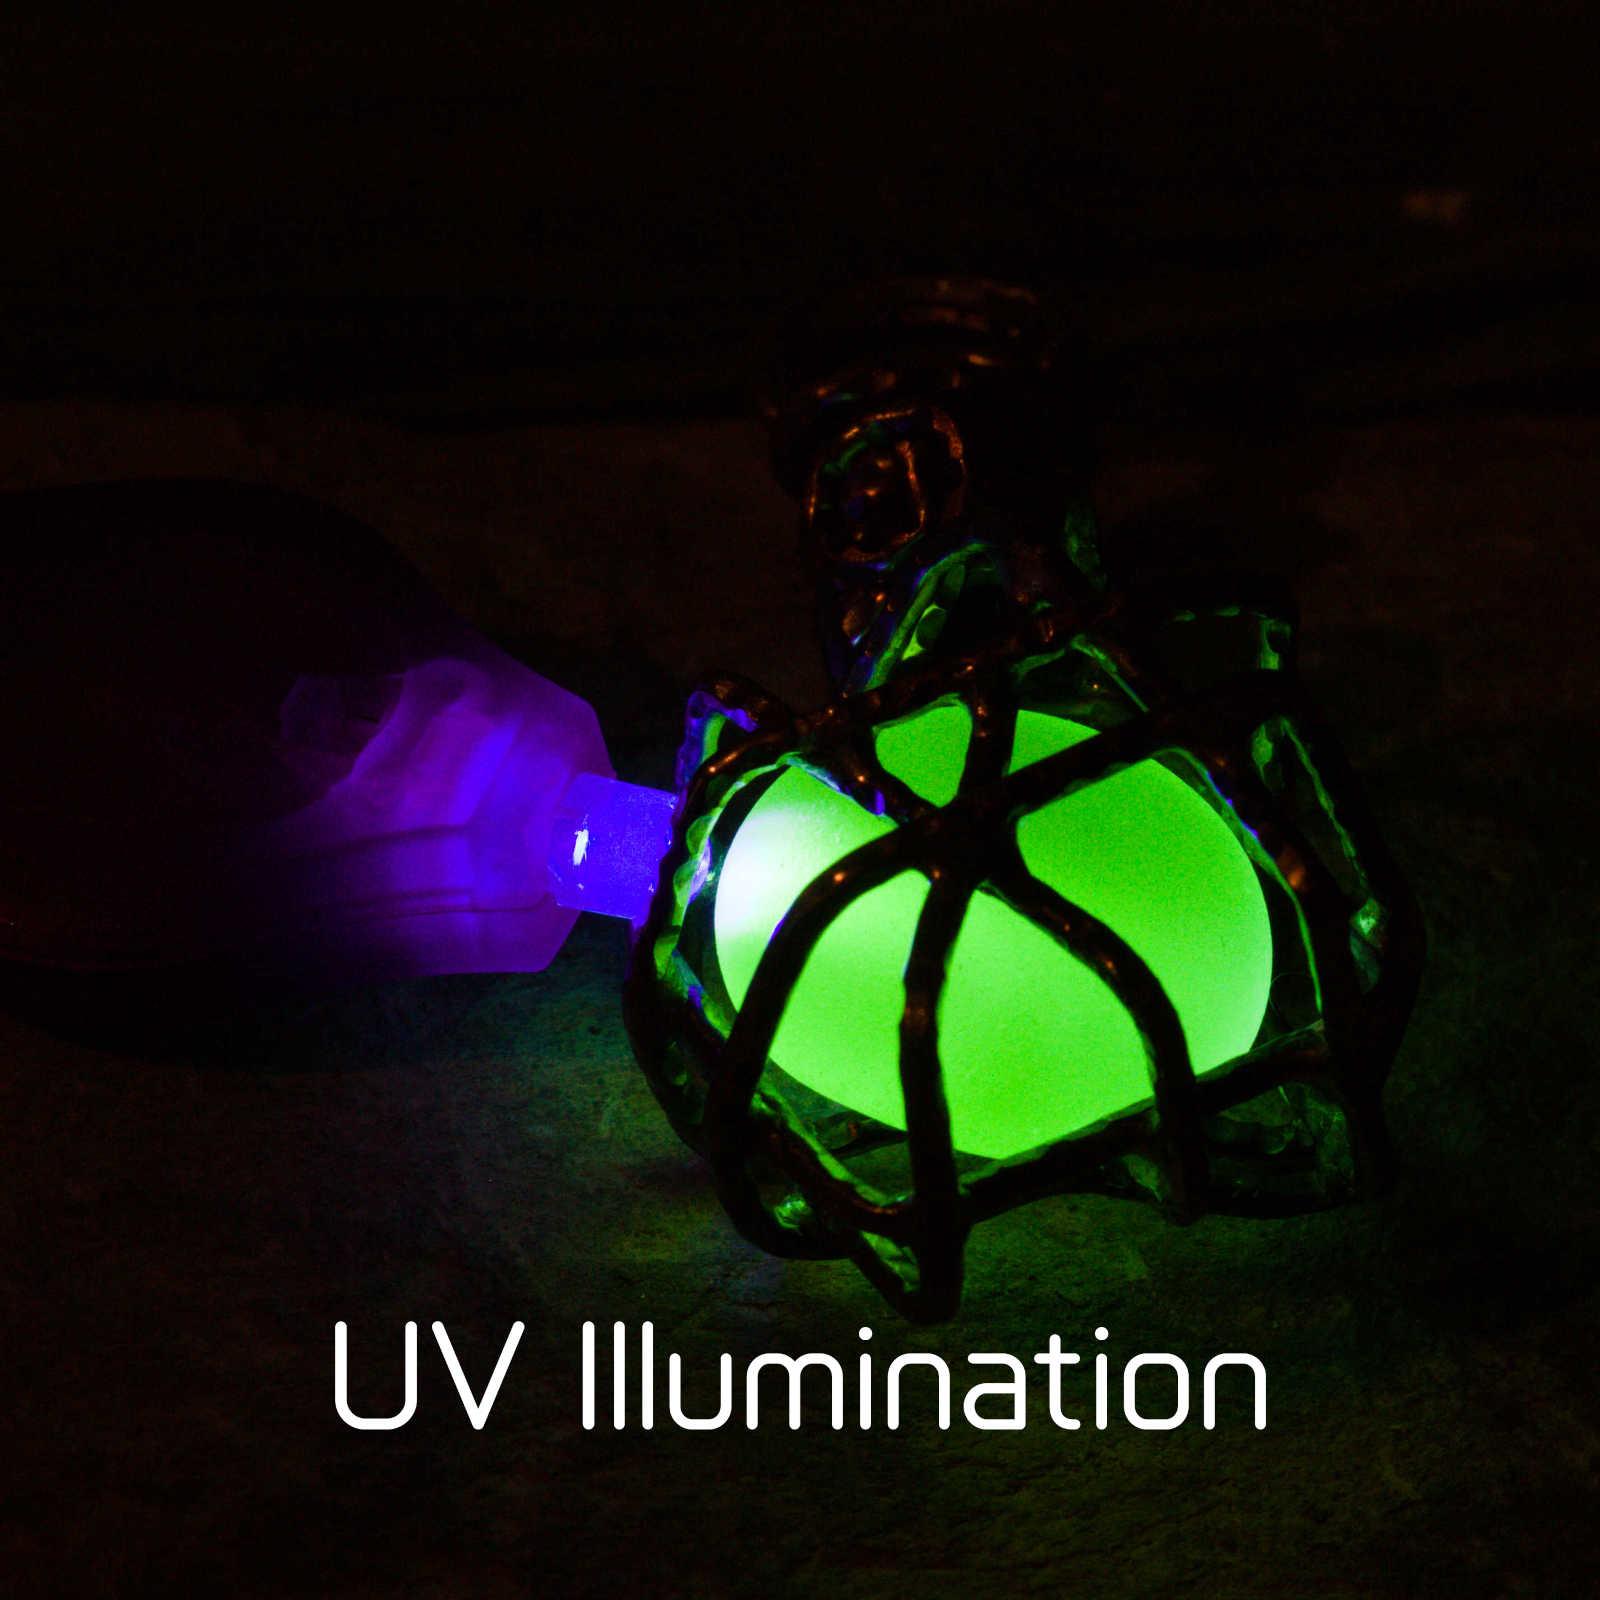 Uranium Glass Accessory under UV Light